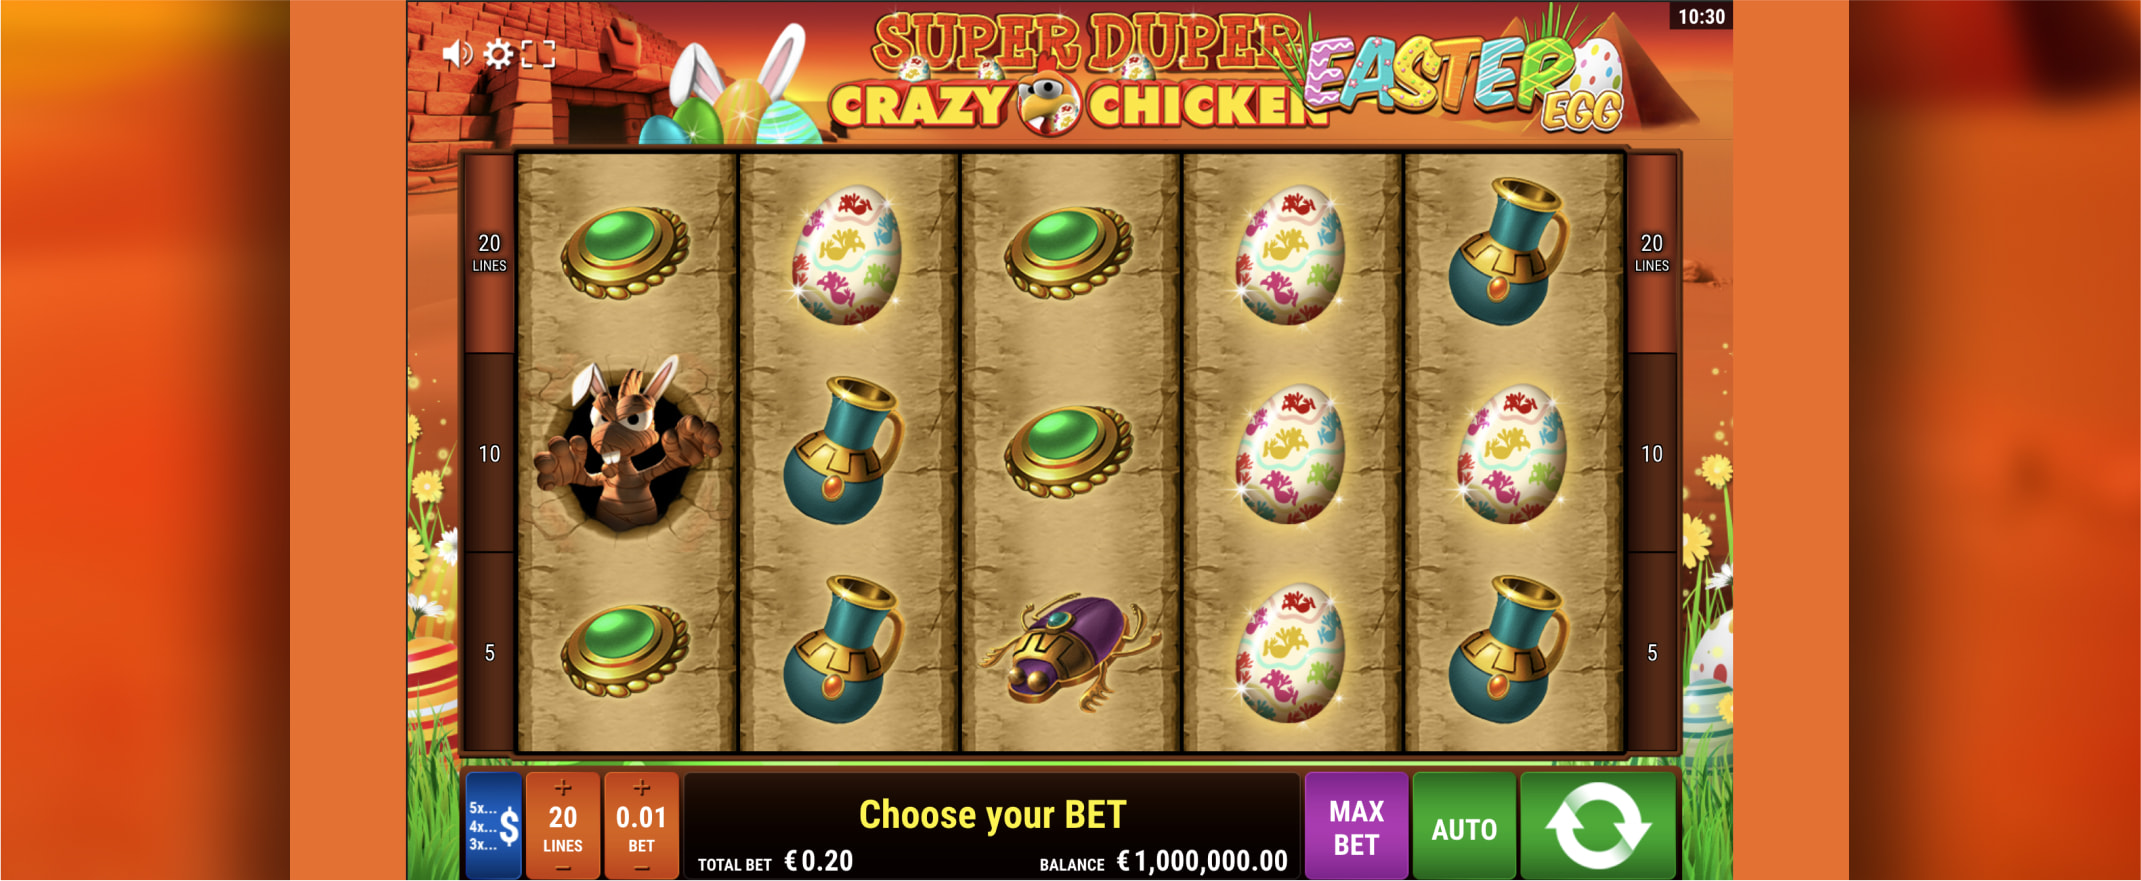 Super Duper Crazy Chicken Easter Egg kuvankaappaus pelistä